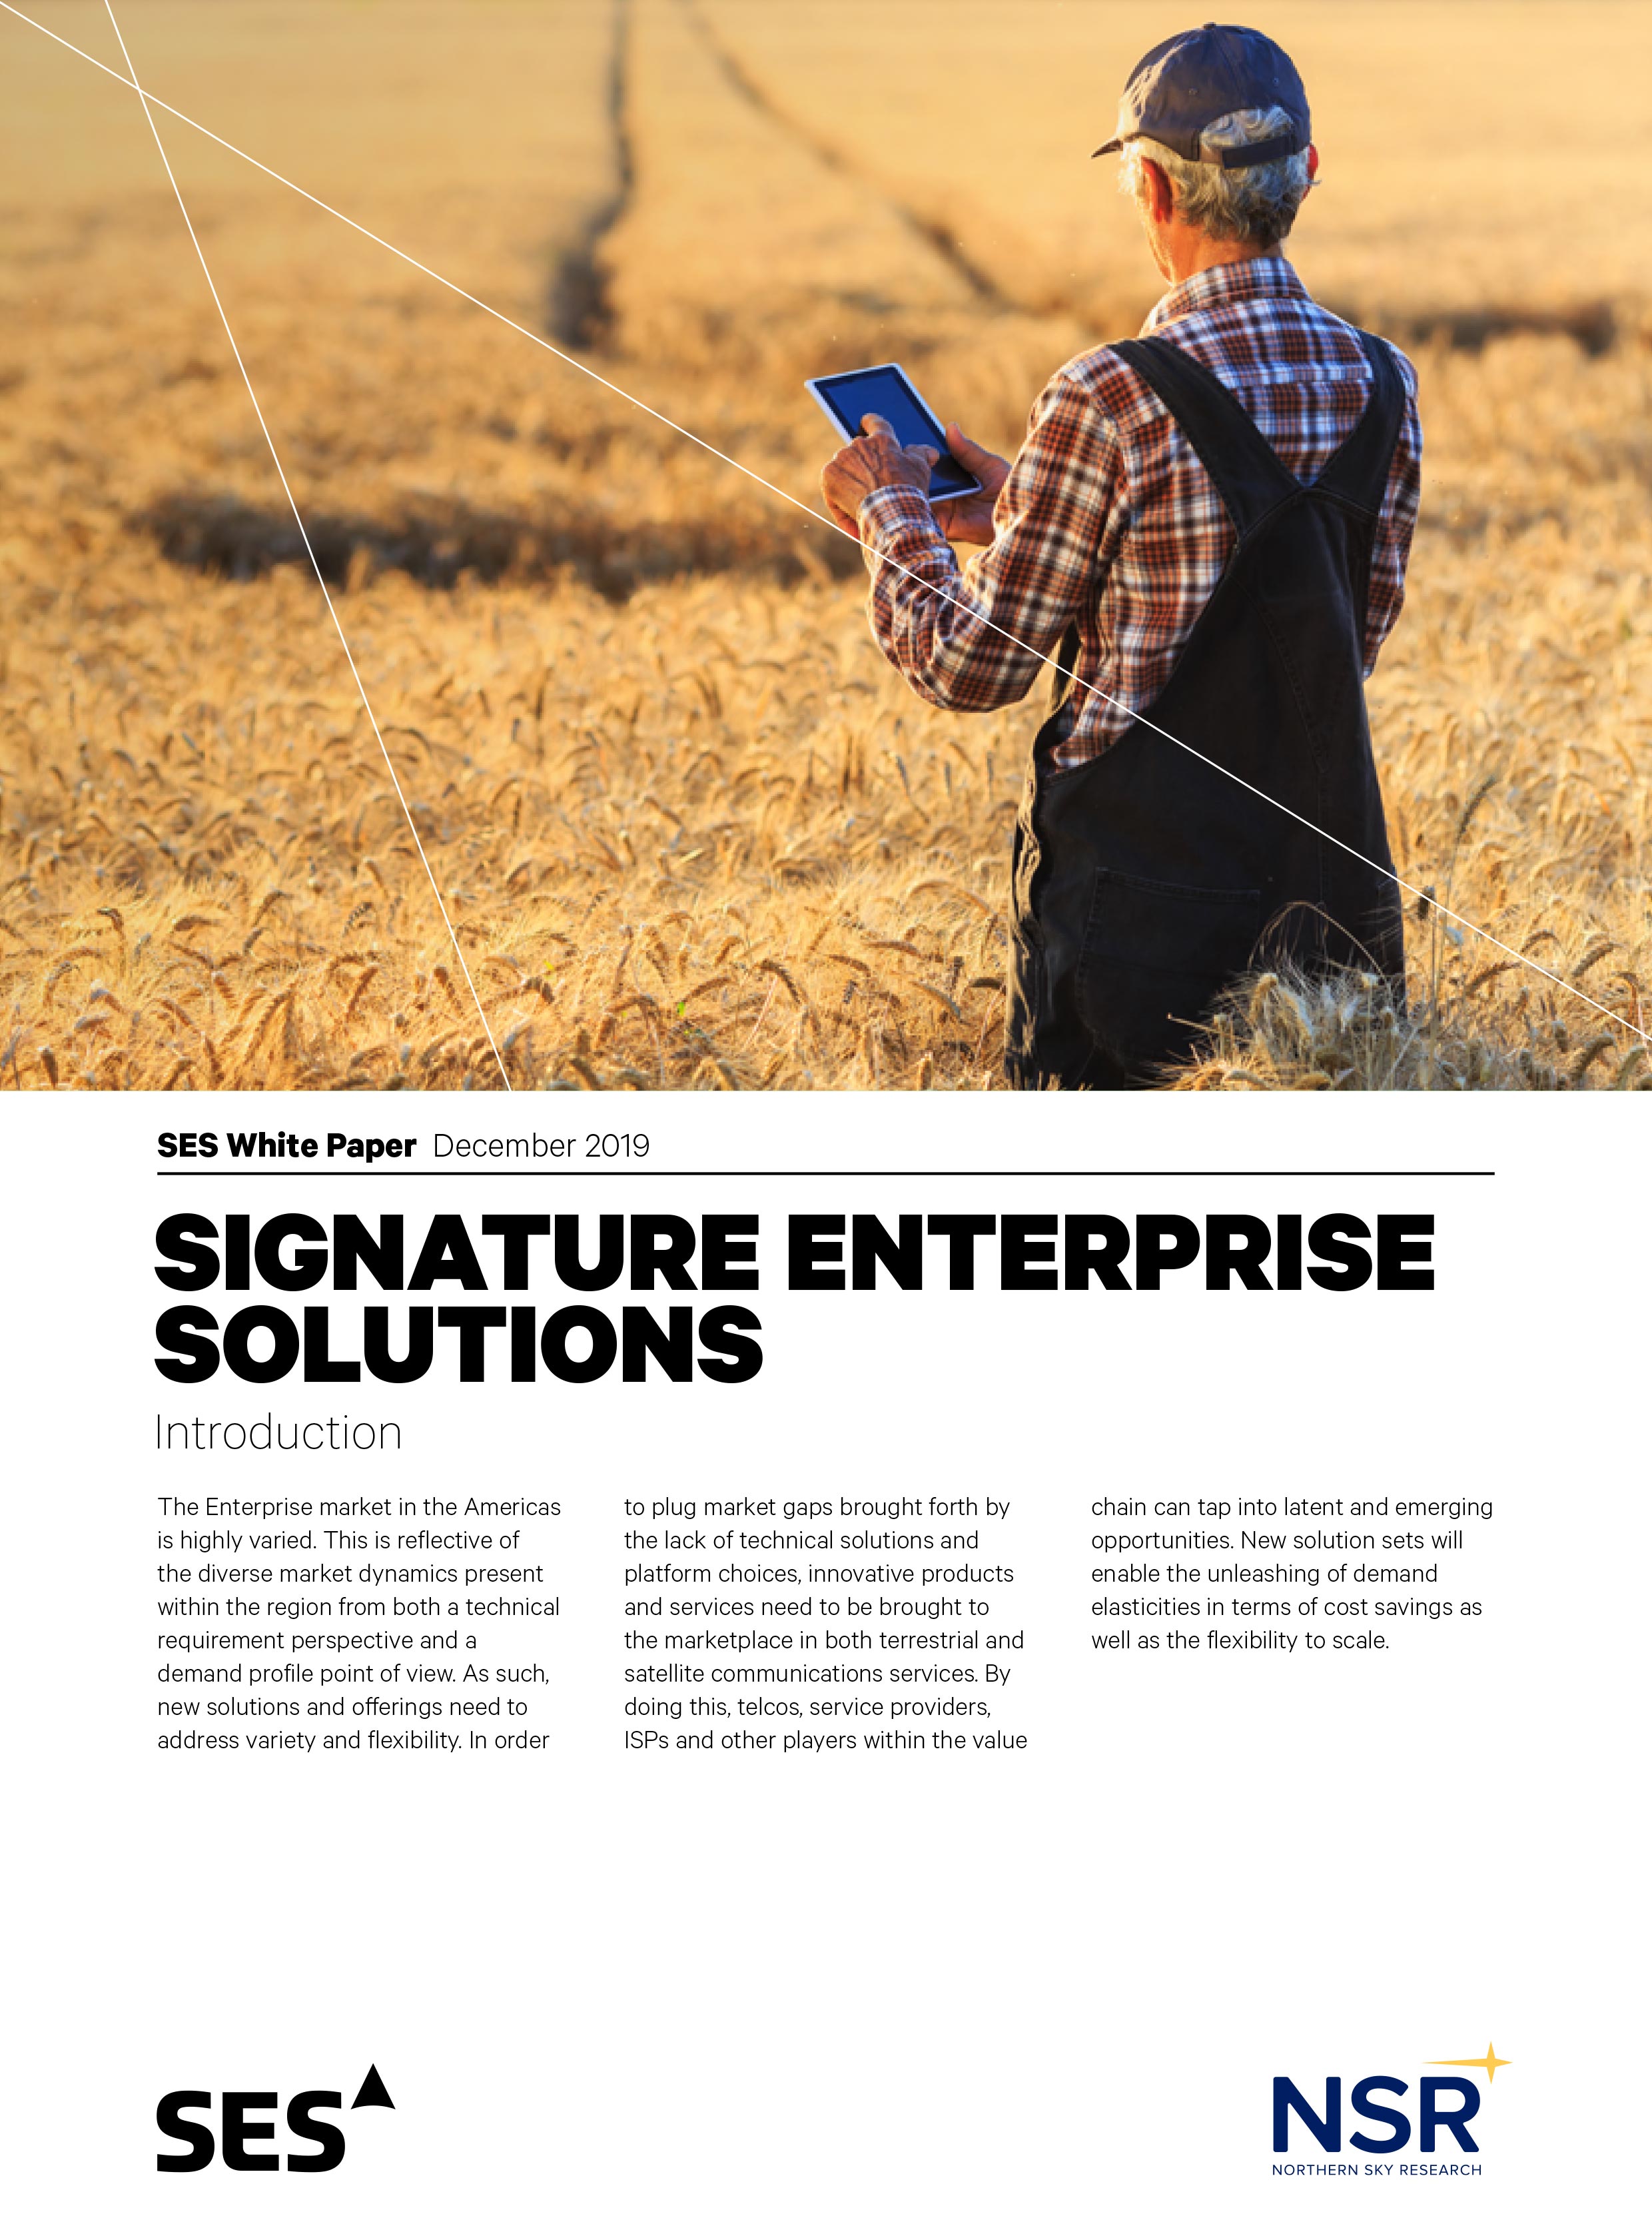 SES_Signature_Enterprise_White_Paper_cover_image